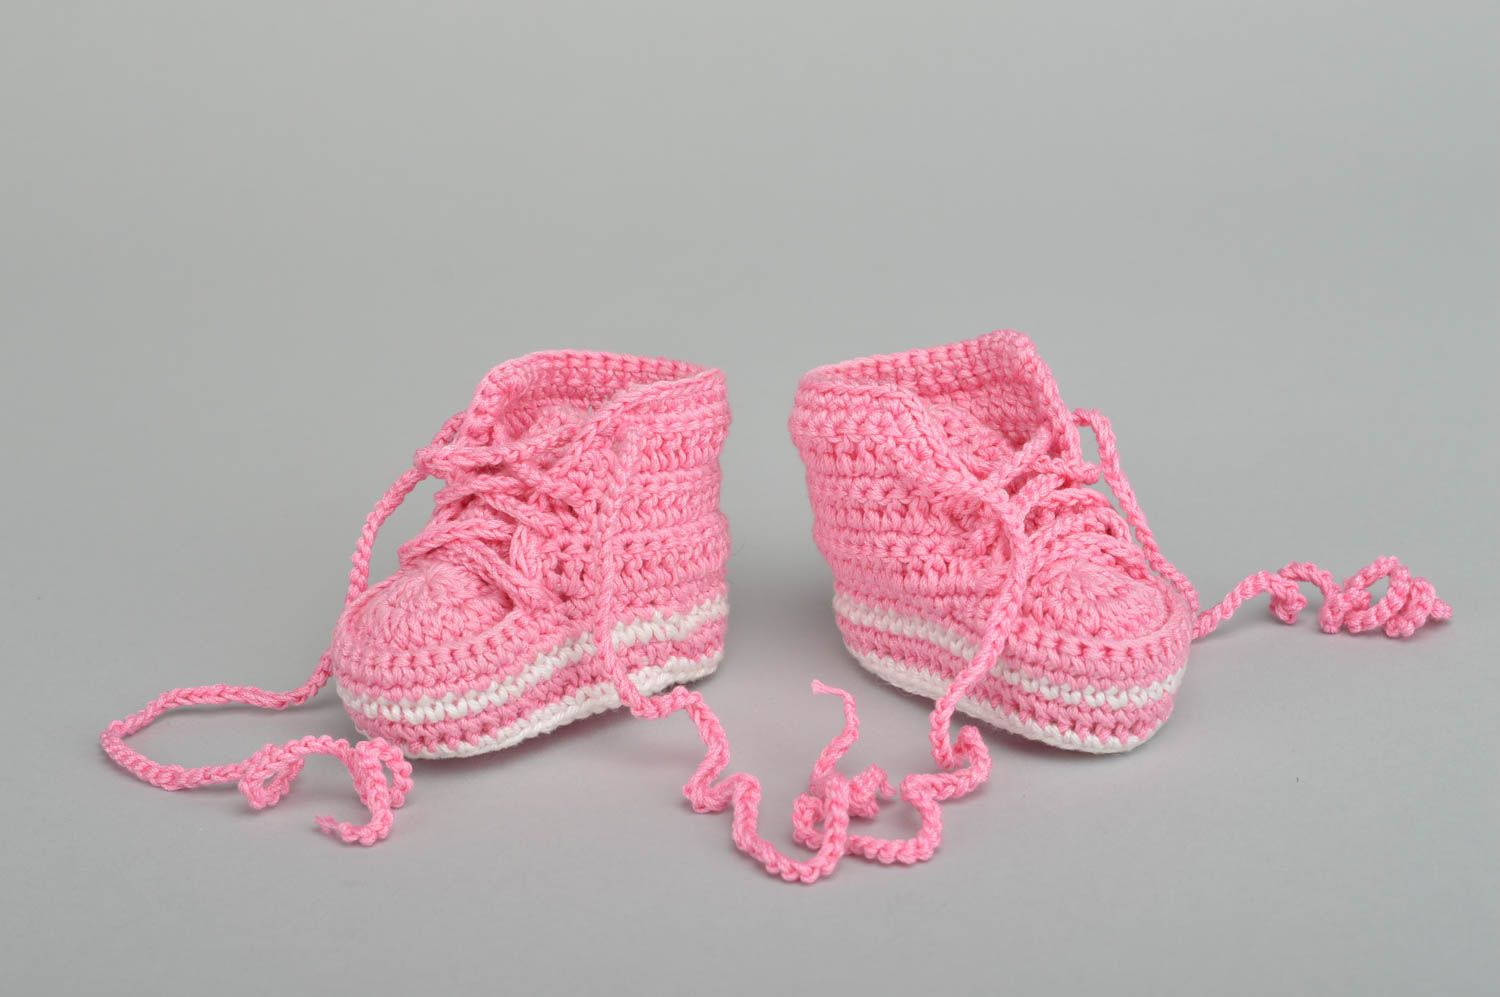 Beautiful handmade baby bootees warm crochet baby booties fashion accessories photo 2